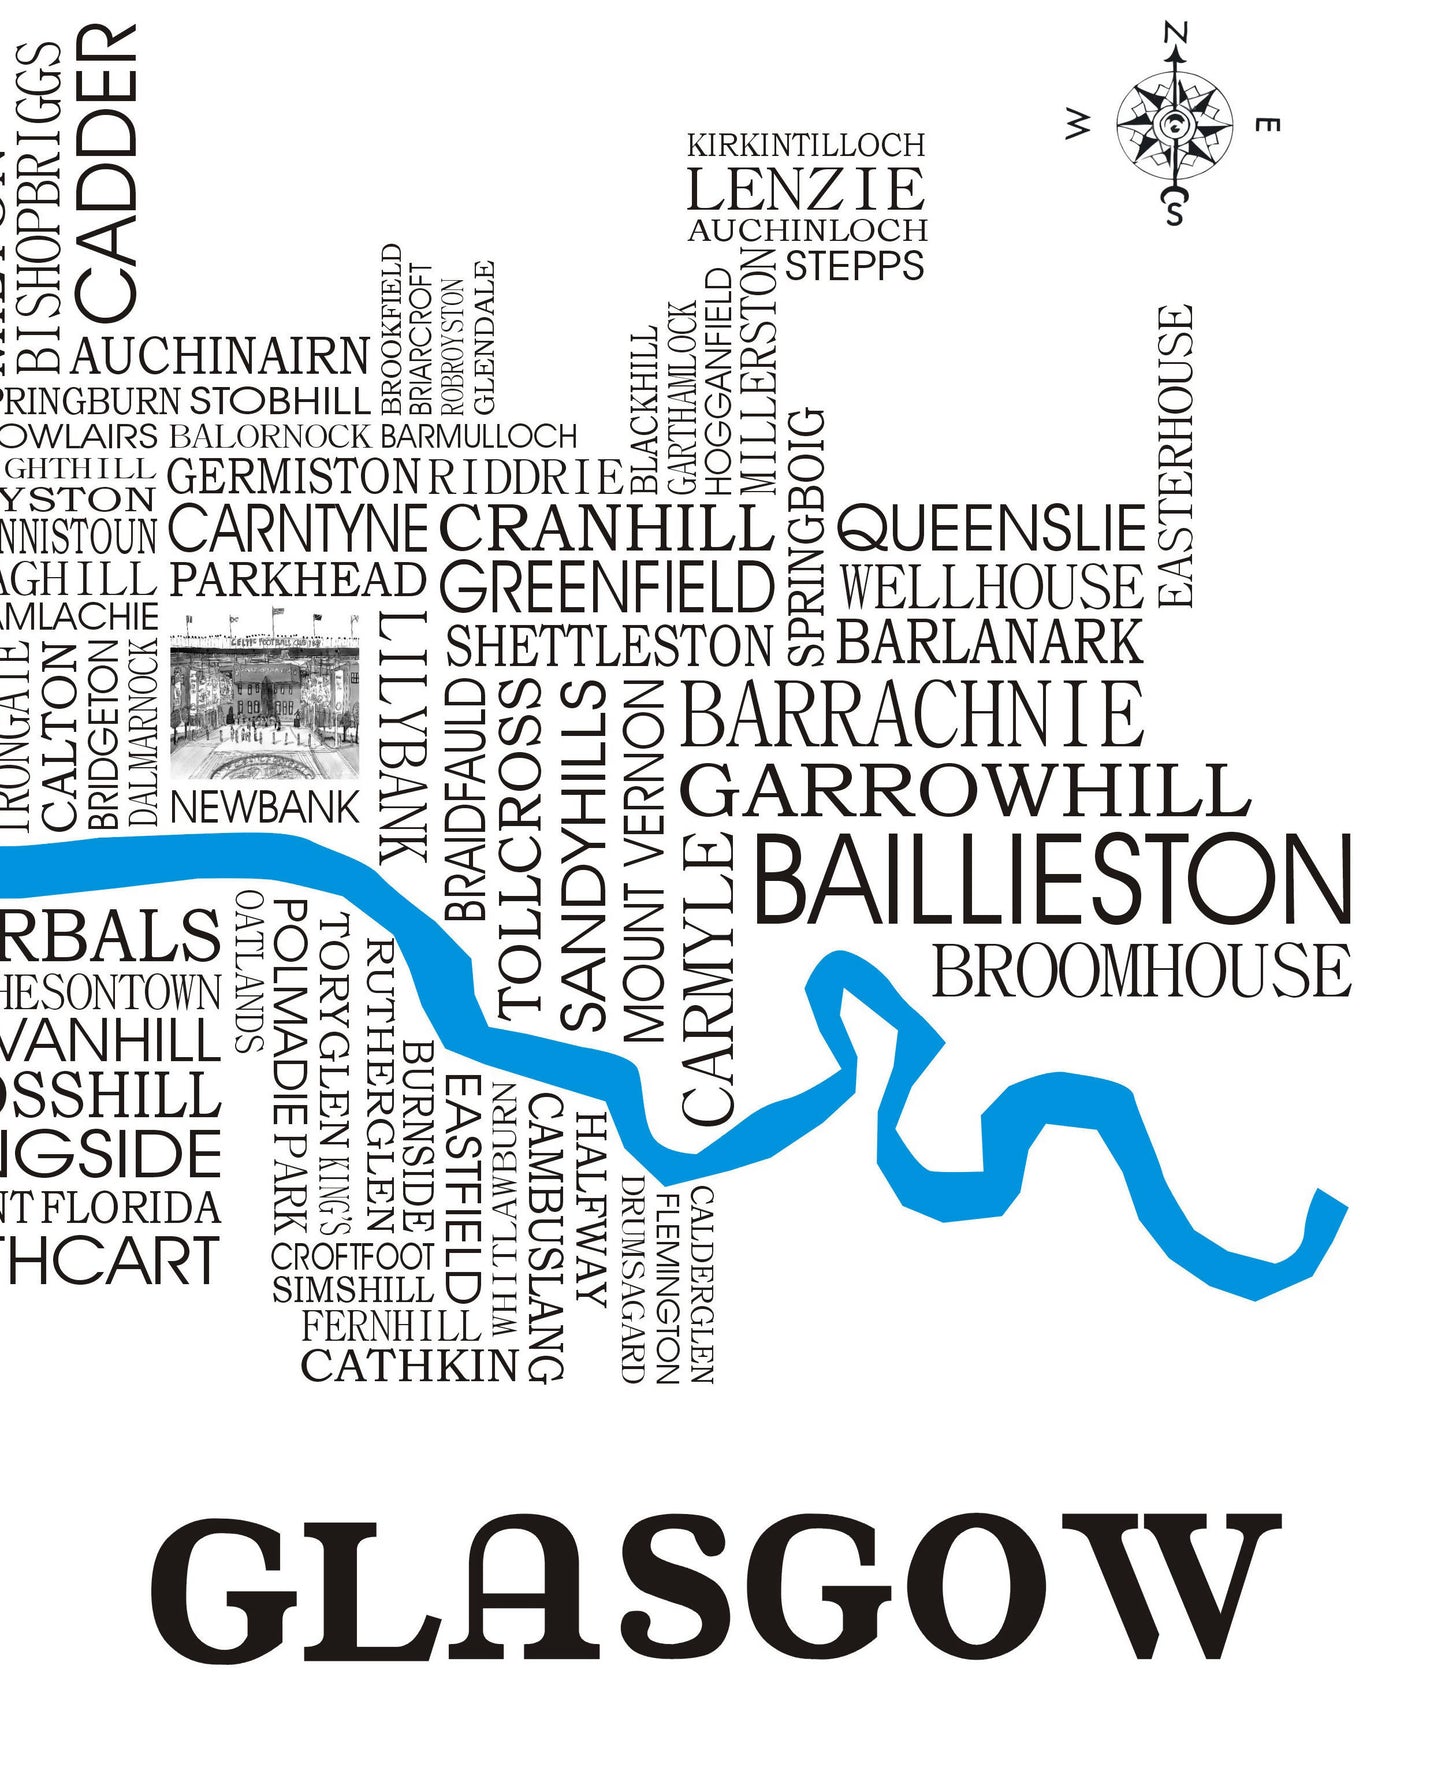 Glasgow Word Map